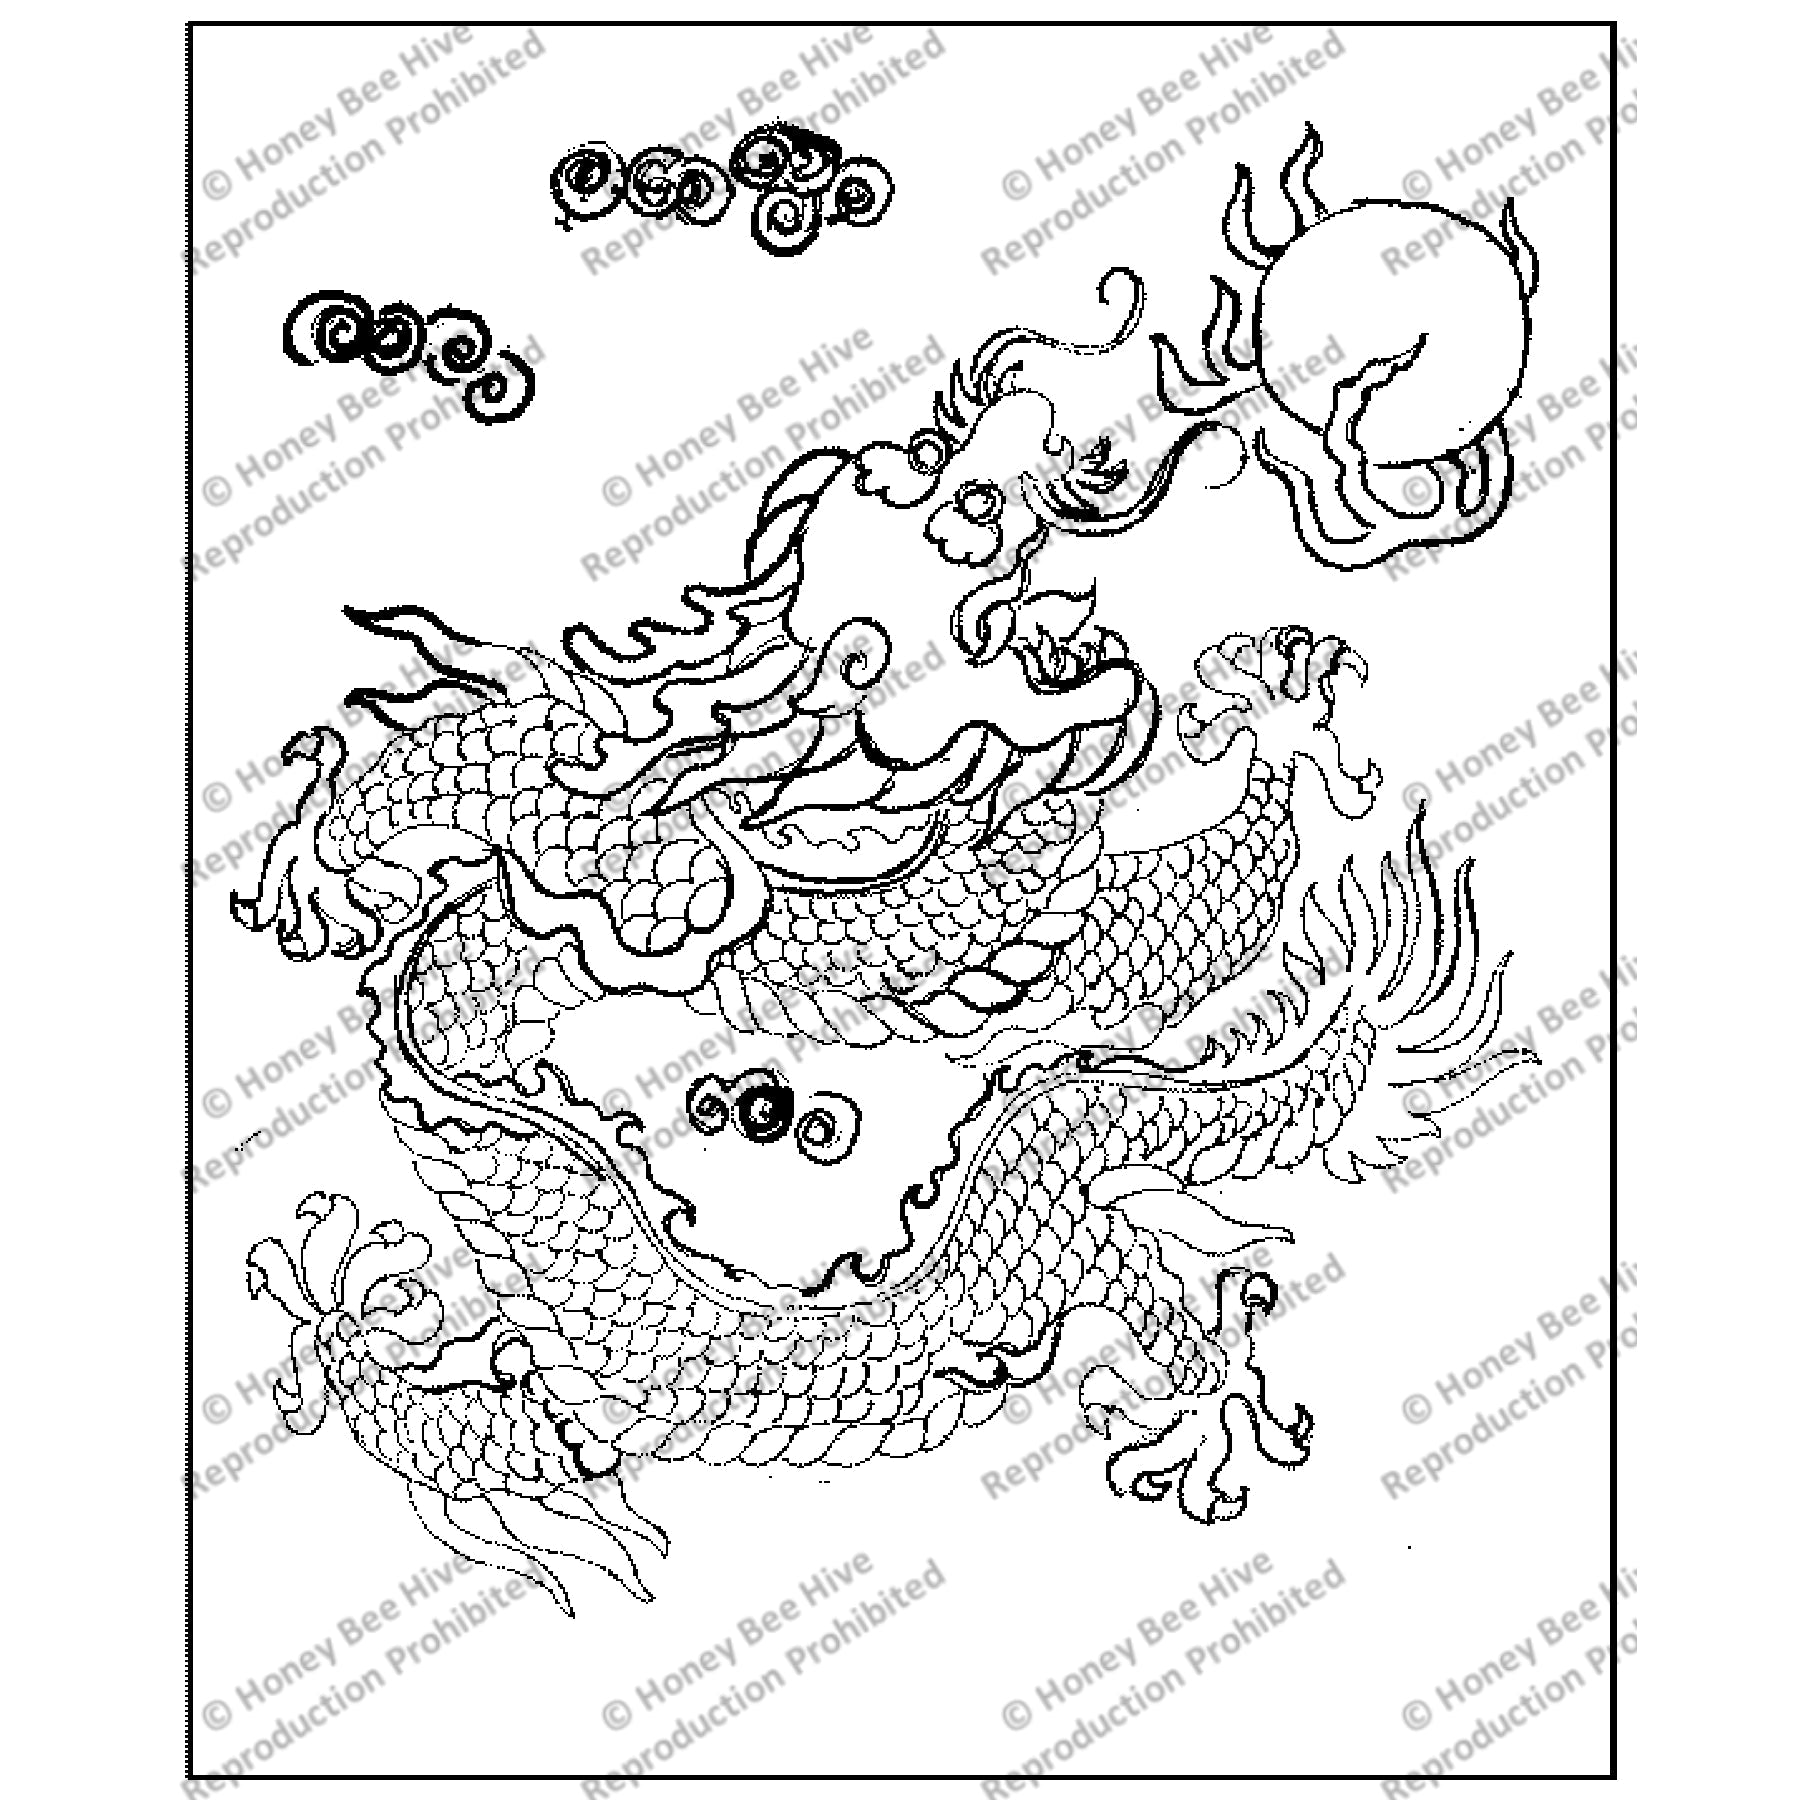 Manchu Dragon, rug hooking pattern